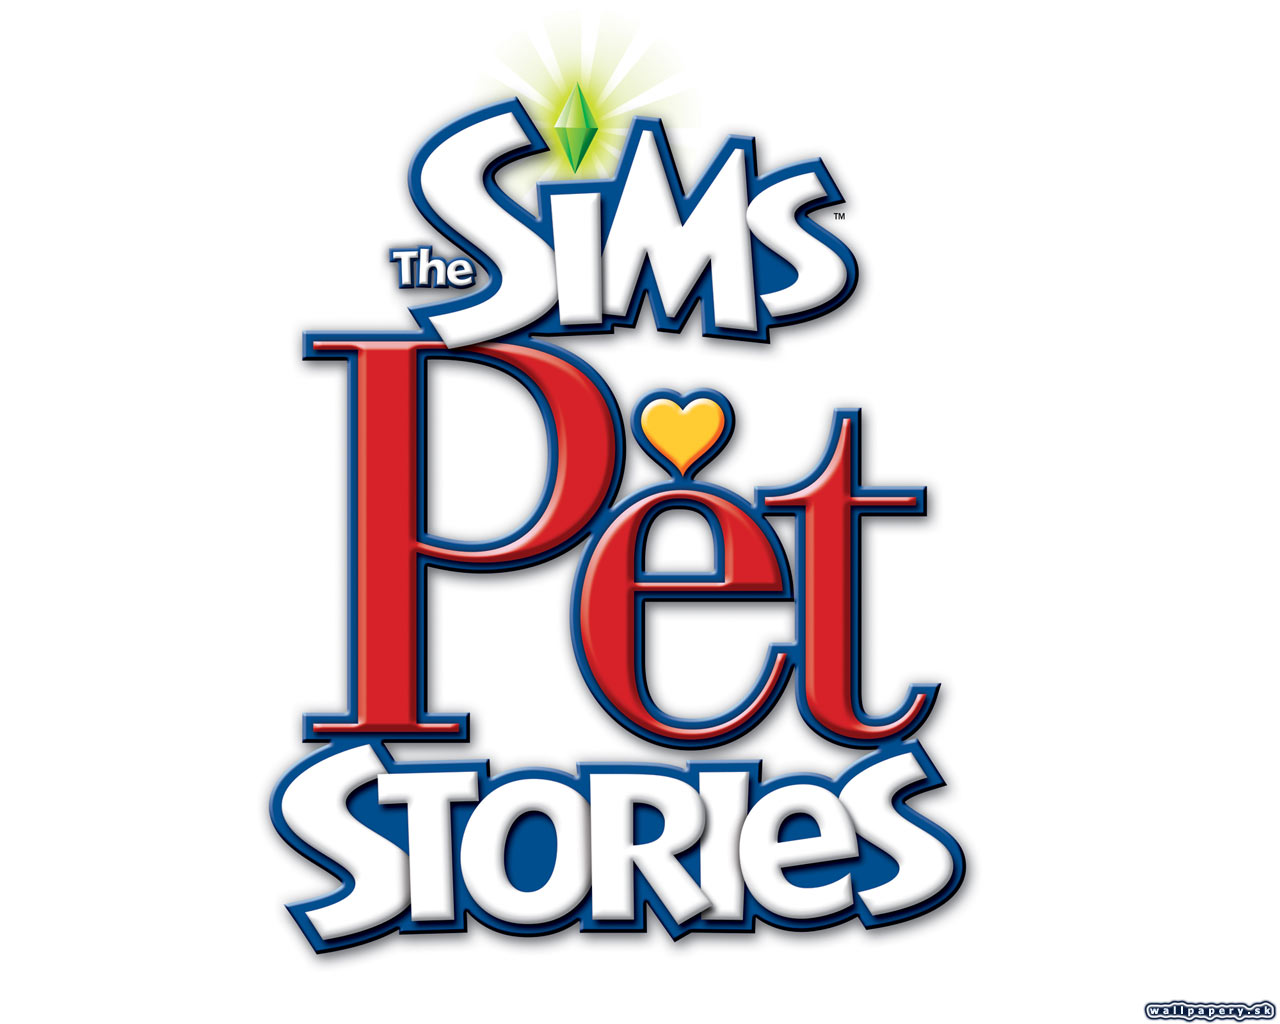 The Sims Pet Stories - wallpaper 3